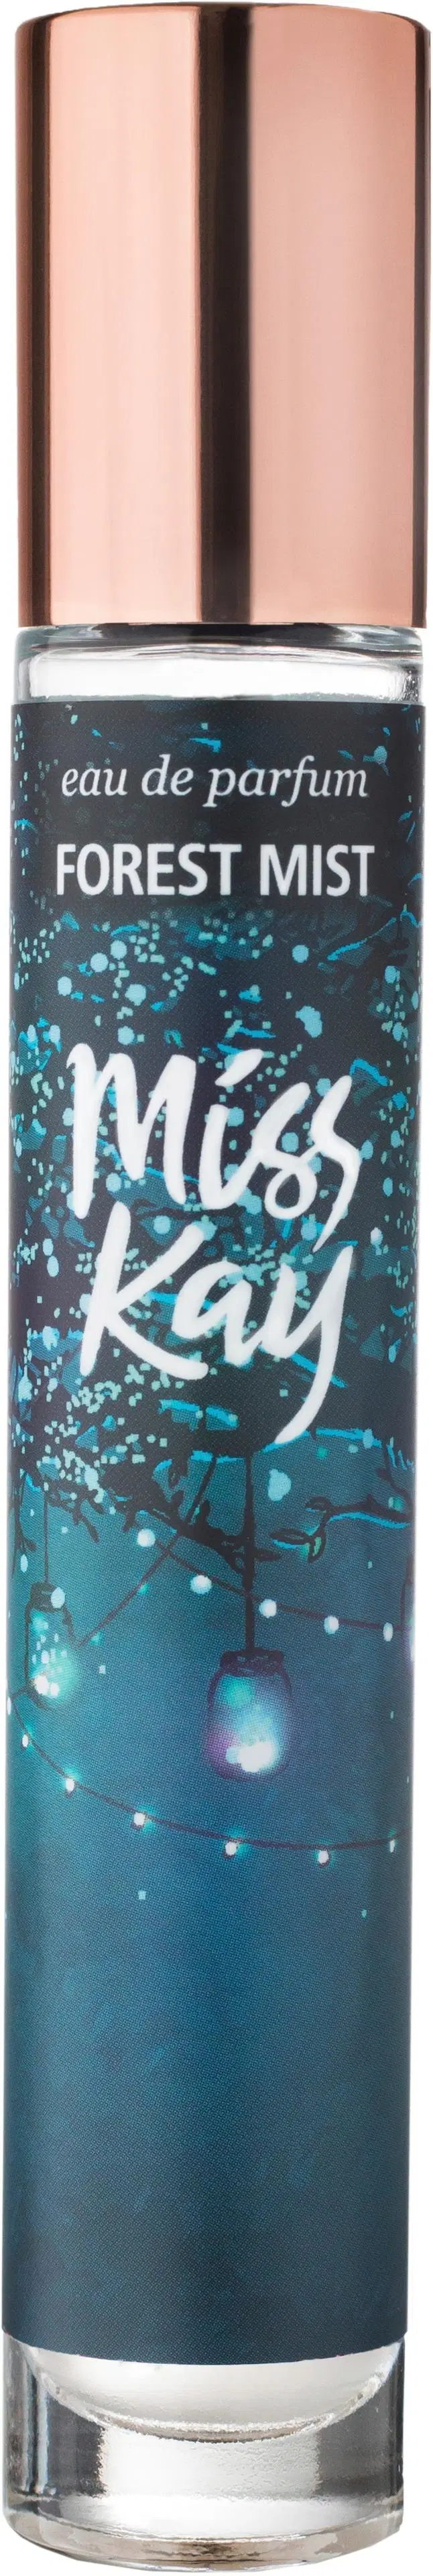 Miss Kay Forest Mist EdP tuoksu 24,5 ml